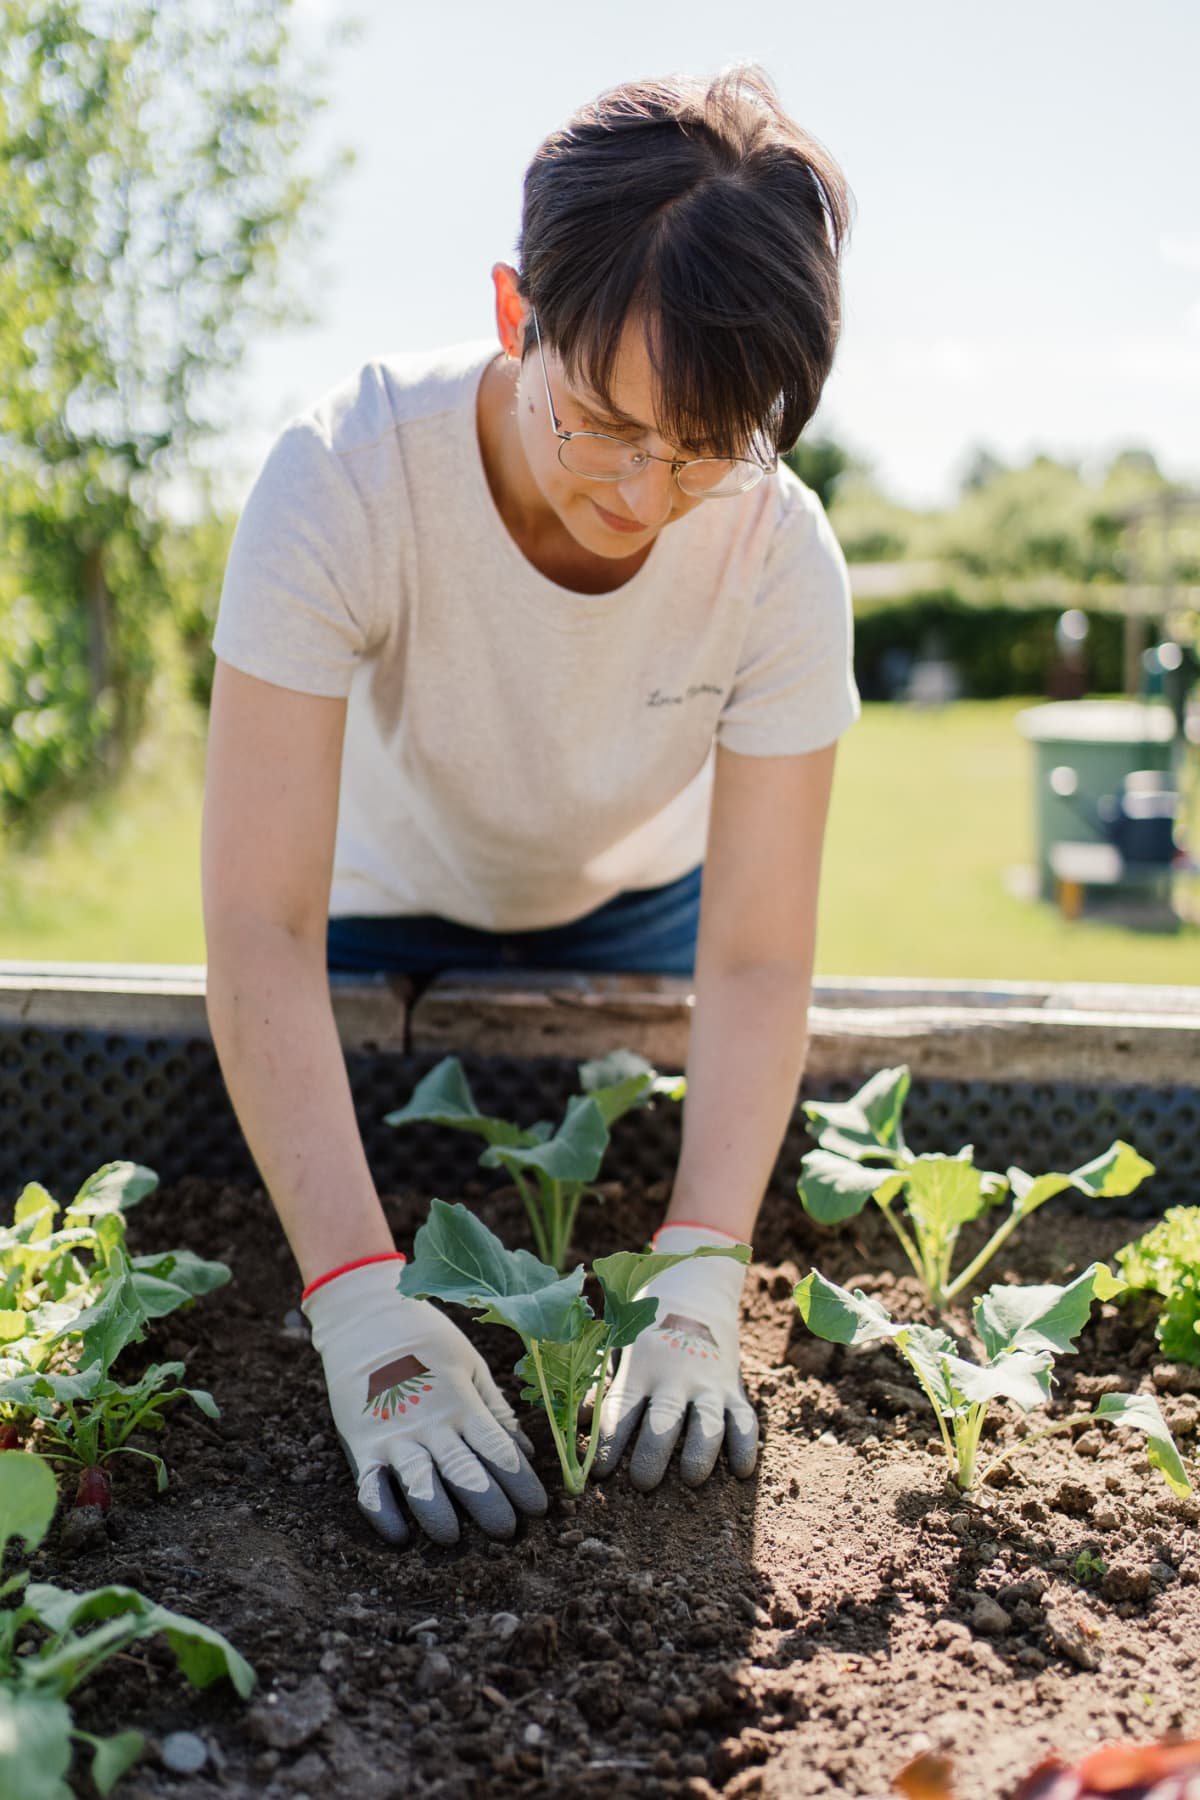 Gardener planting in a raised garden bed